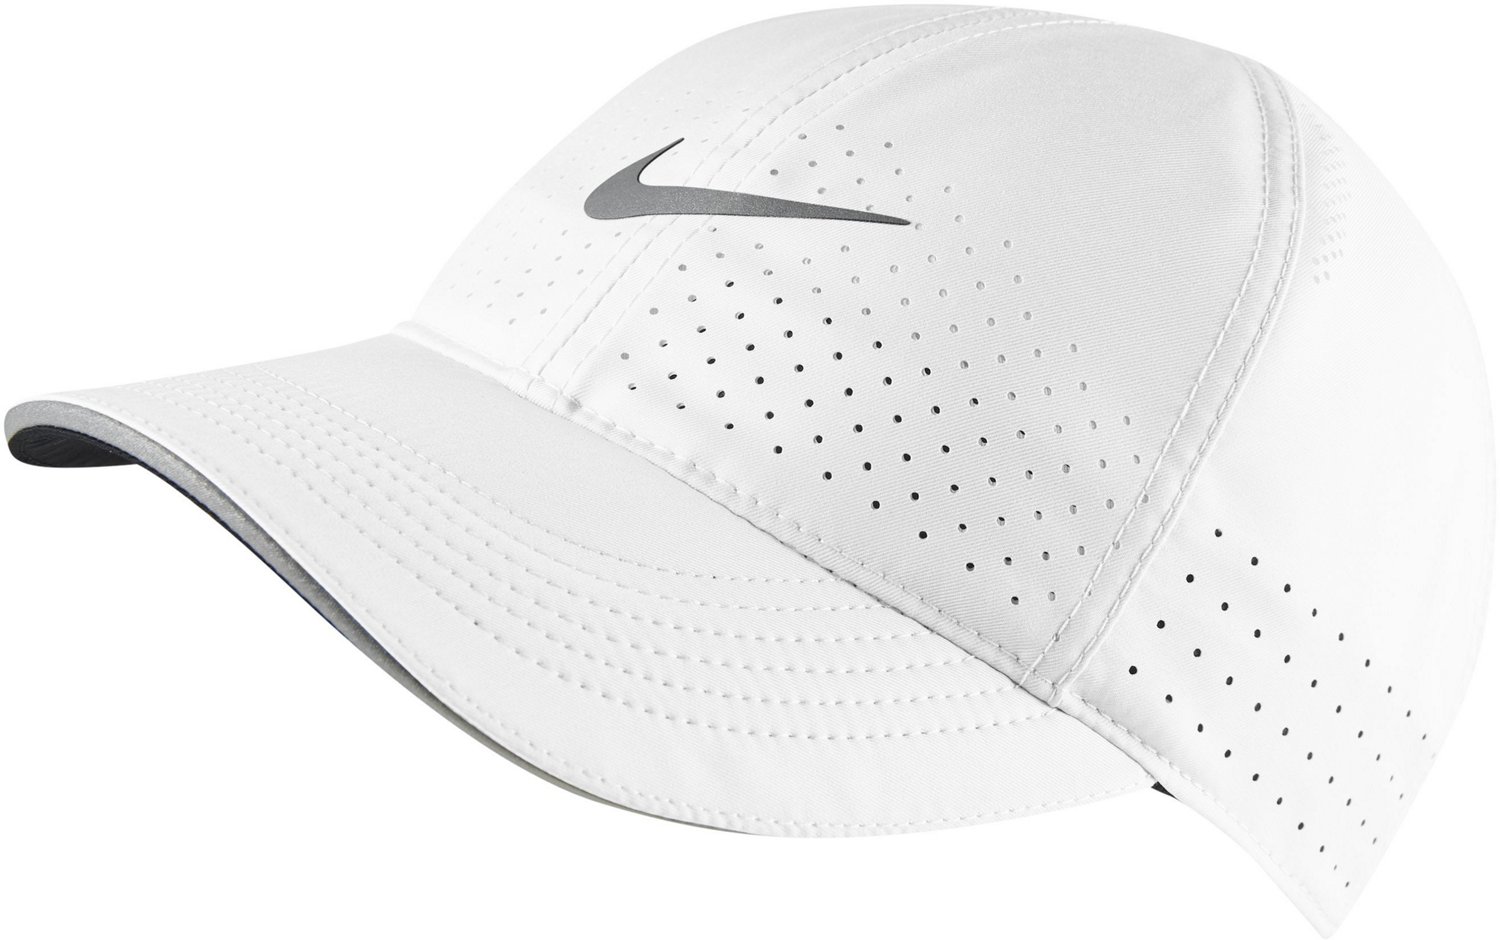 Nike New York Yankees L91 Featherlight Adjustable Cap in Gray for Men